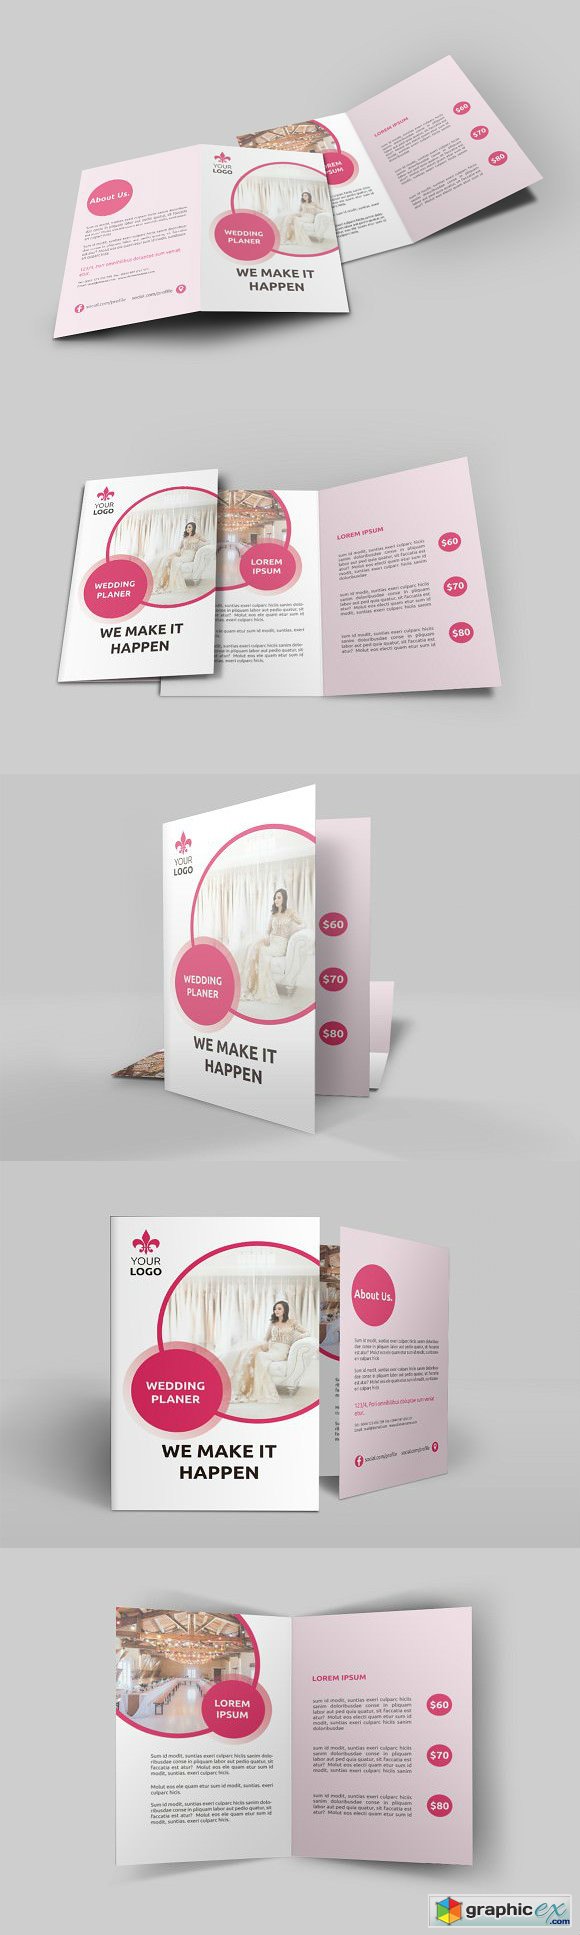 Wedding Services Bi Fold Brochure